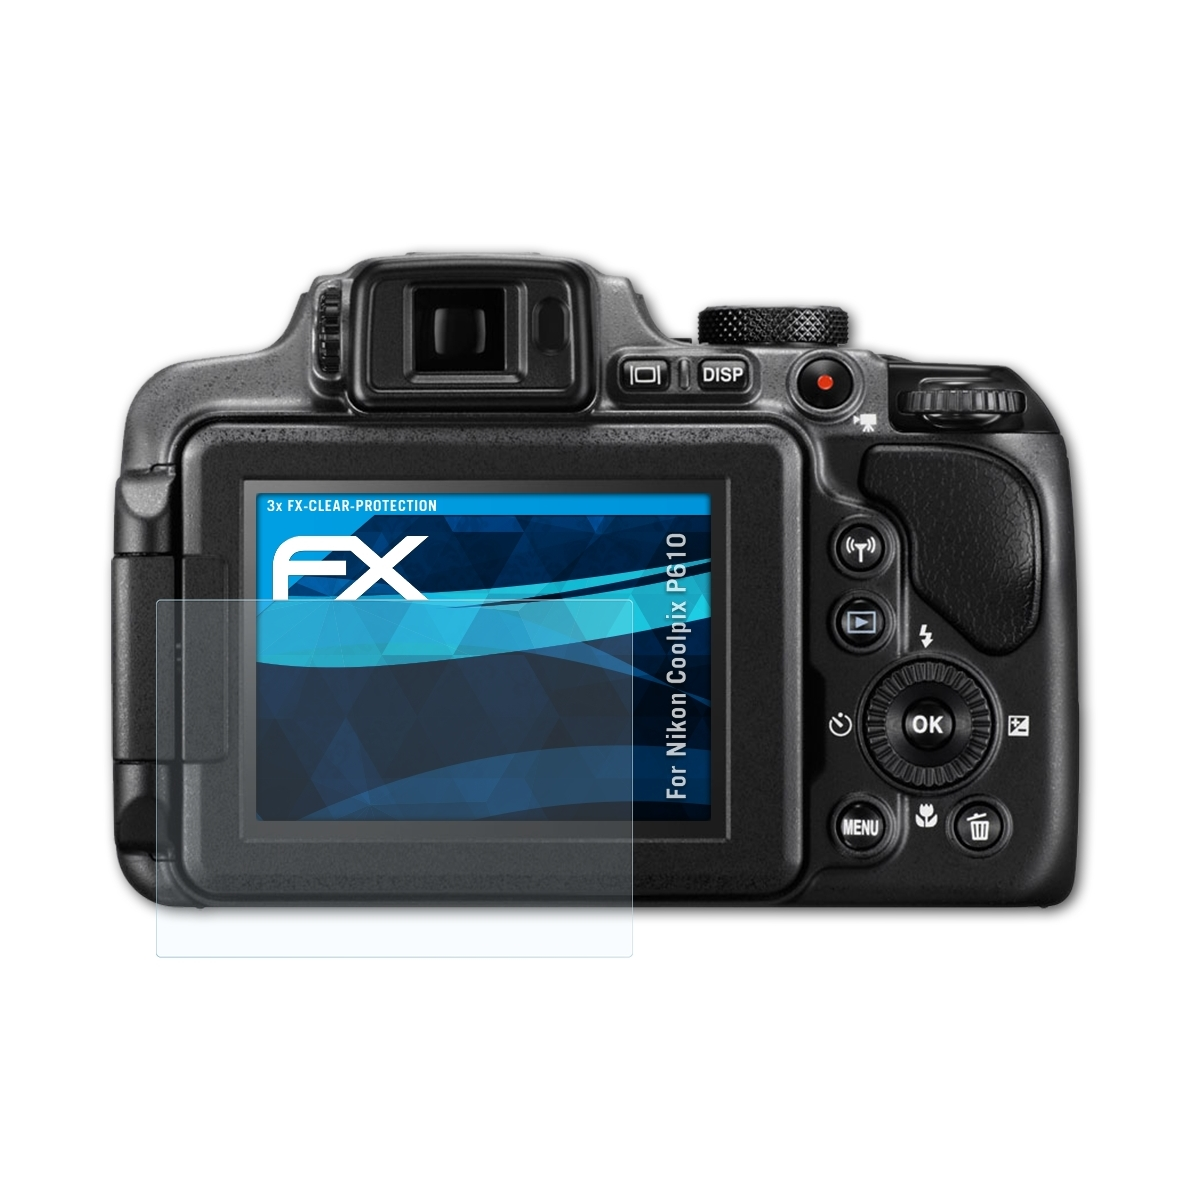 ATFOLIX 3x FX-Clear Displayschutz(für P610) Nikon Coolpix